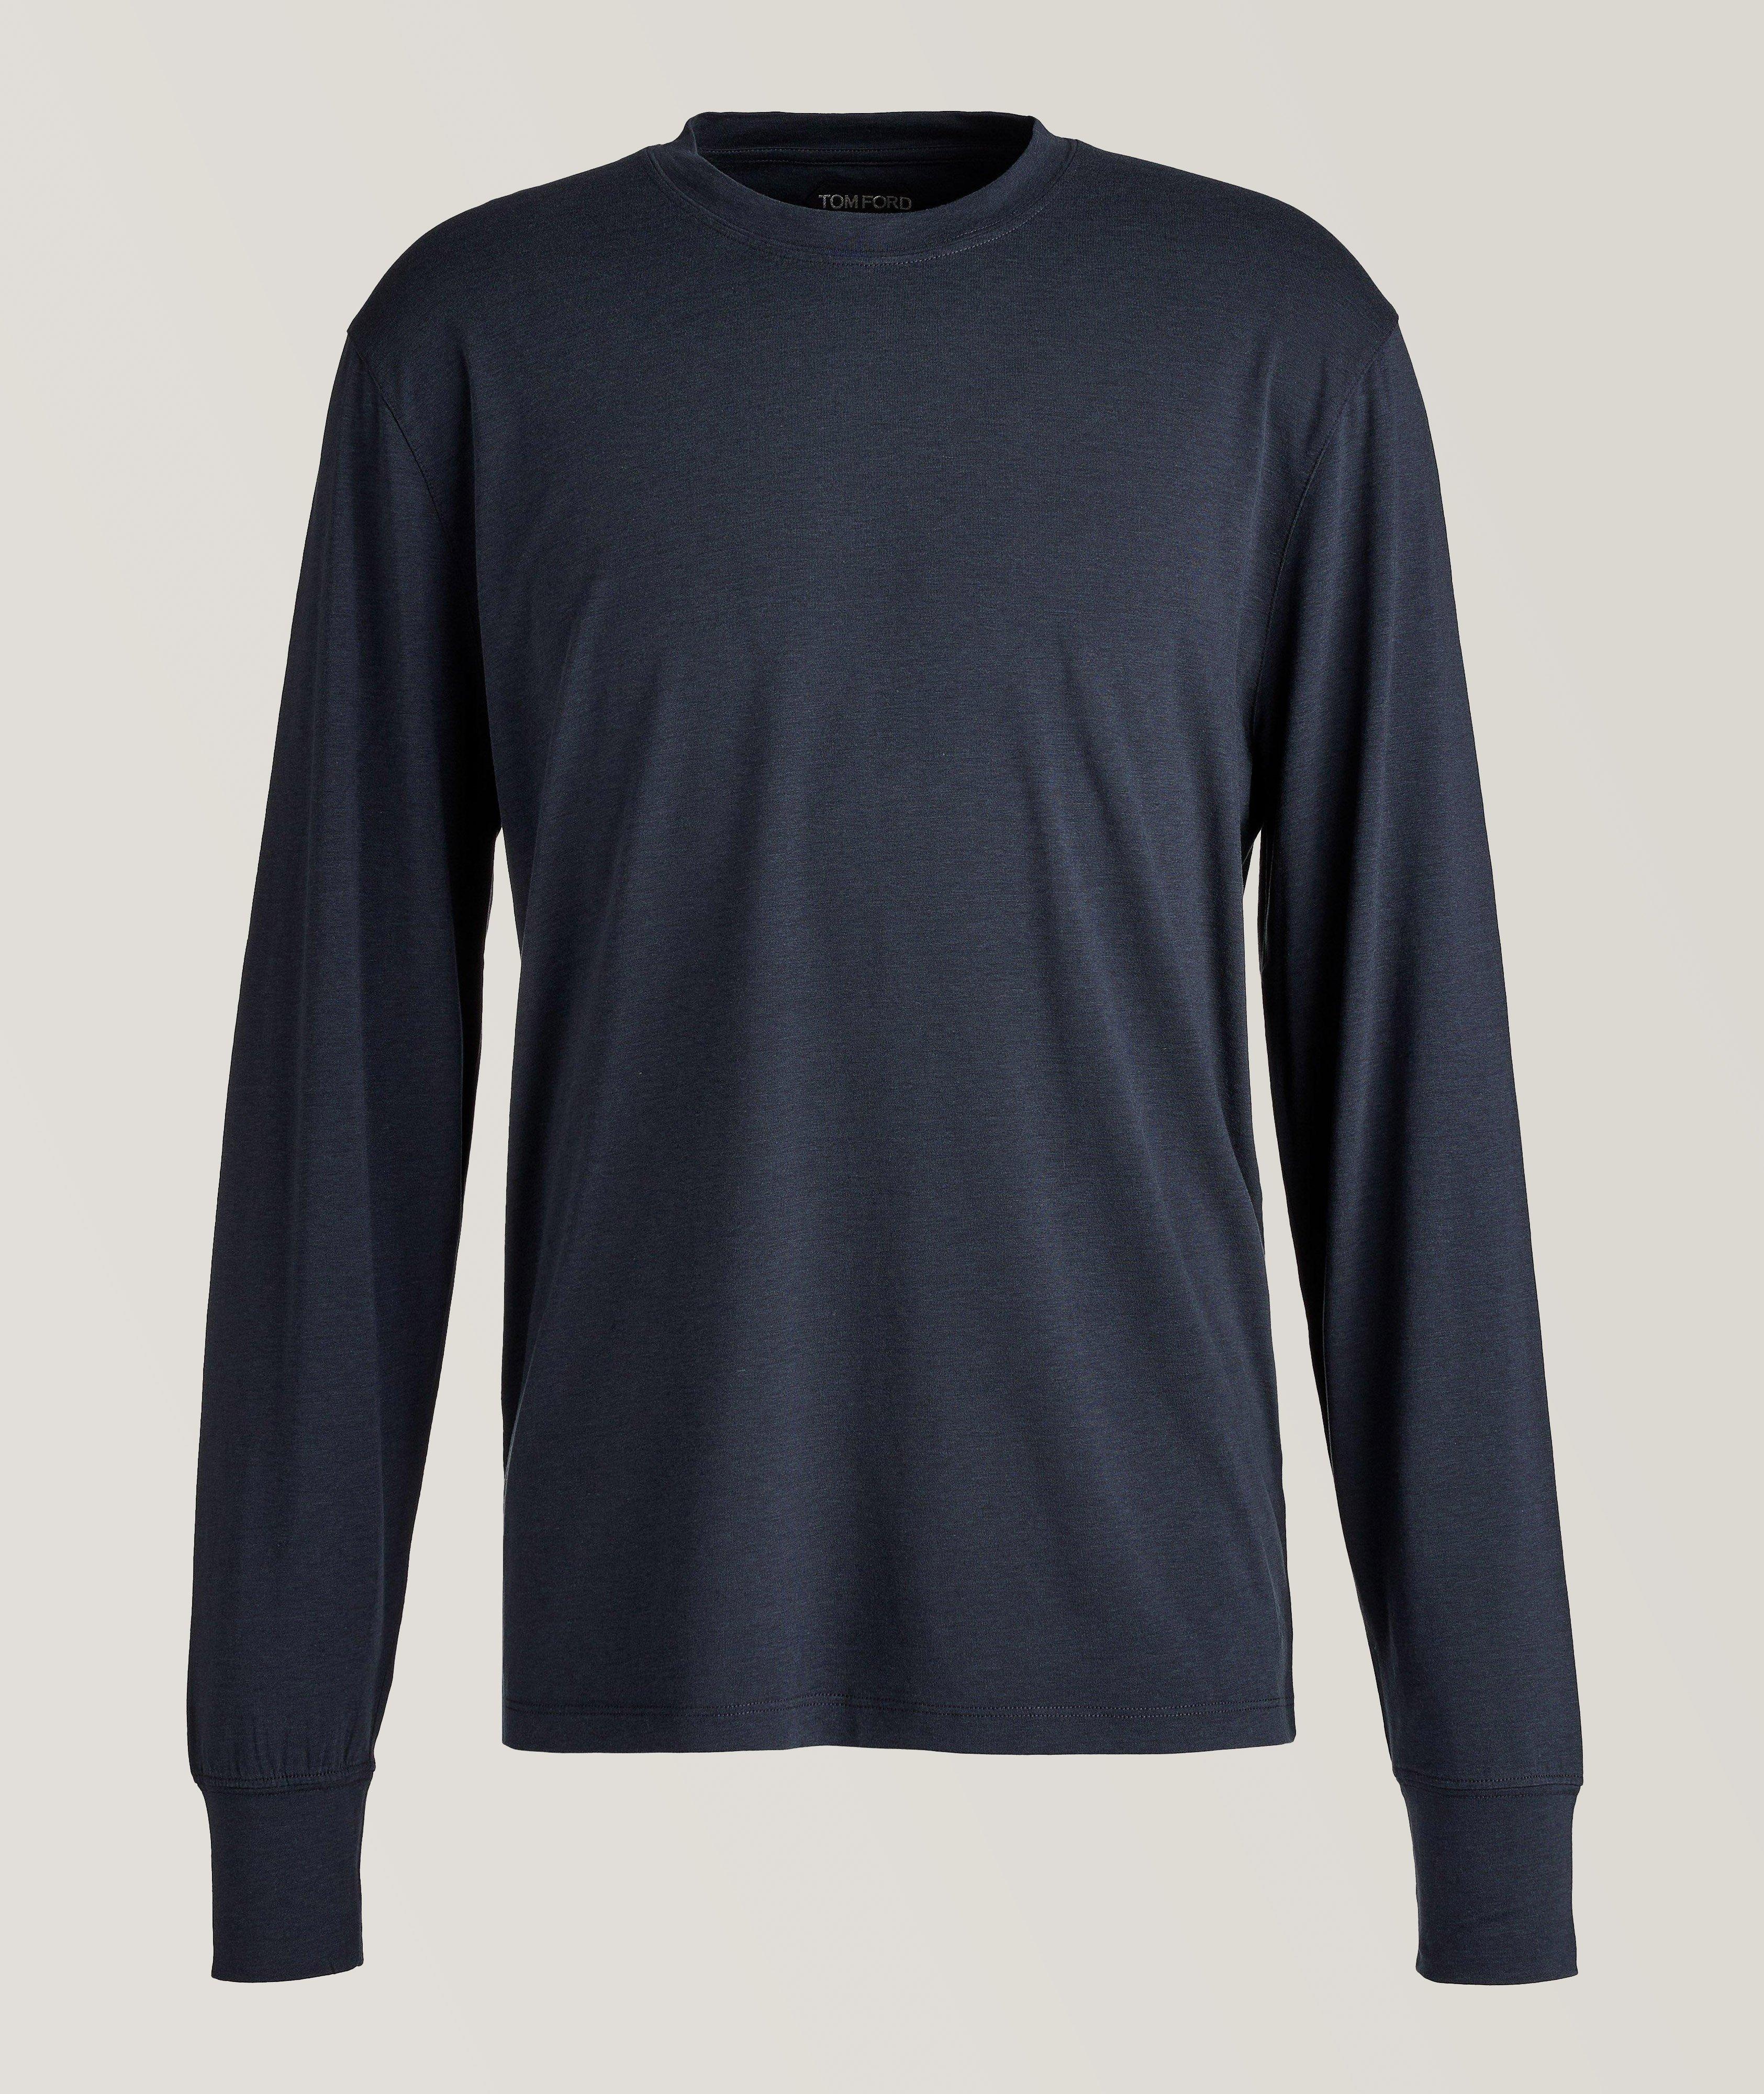 Jersey Lyocell-Cotton T-Shirt image 0